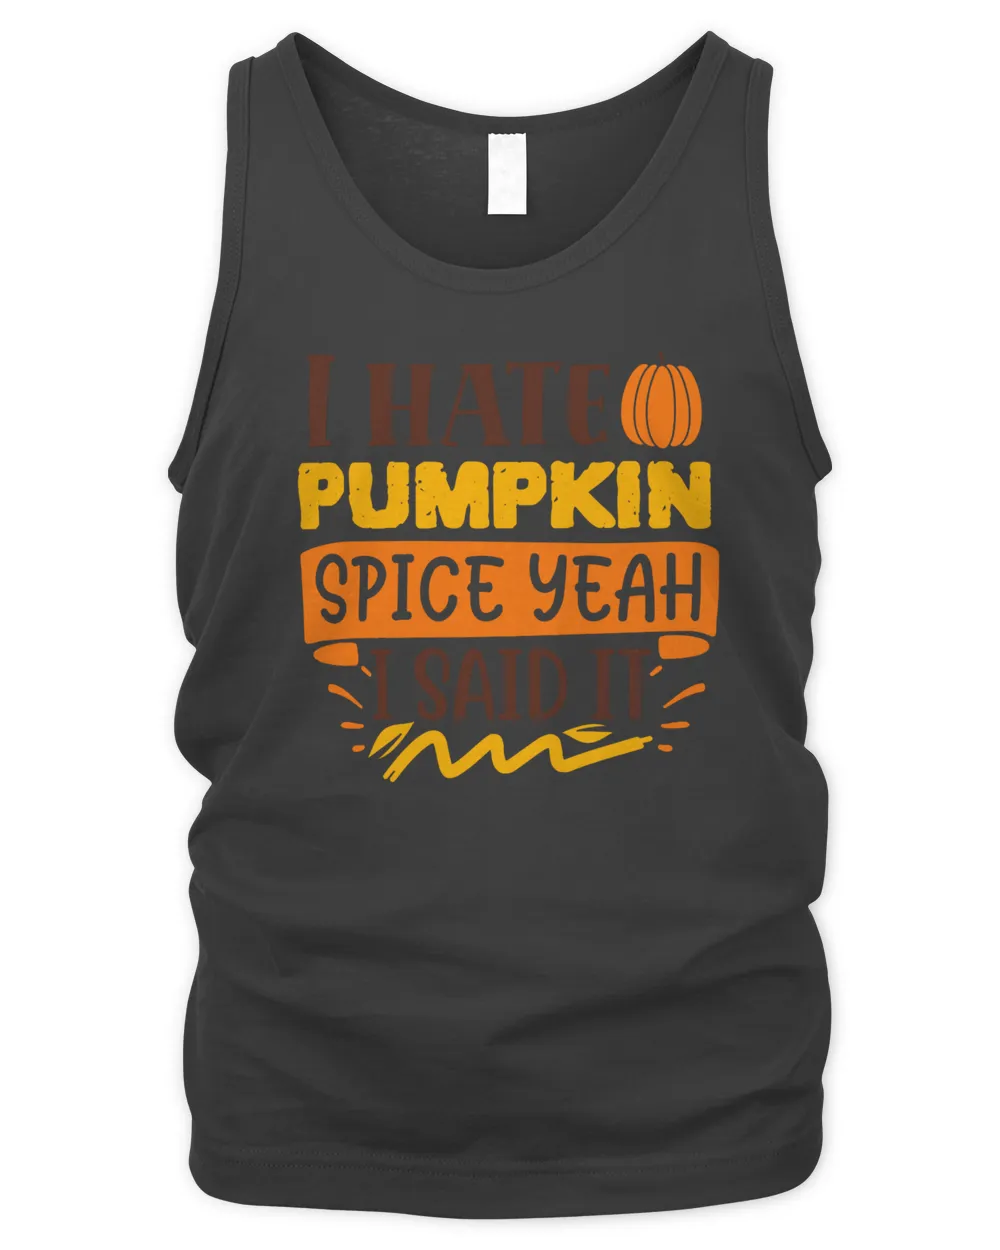 I hate pumpkin spice yeah I said it